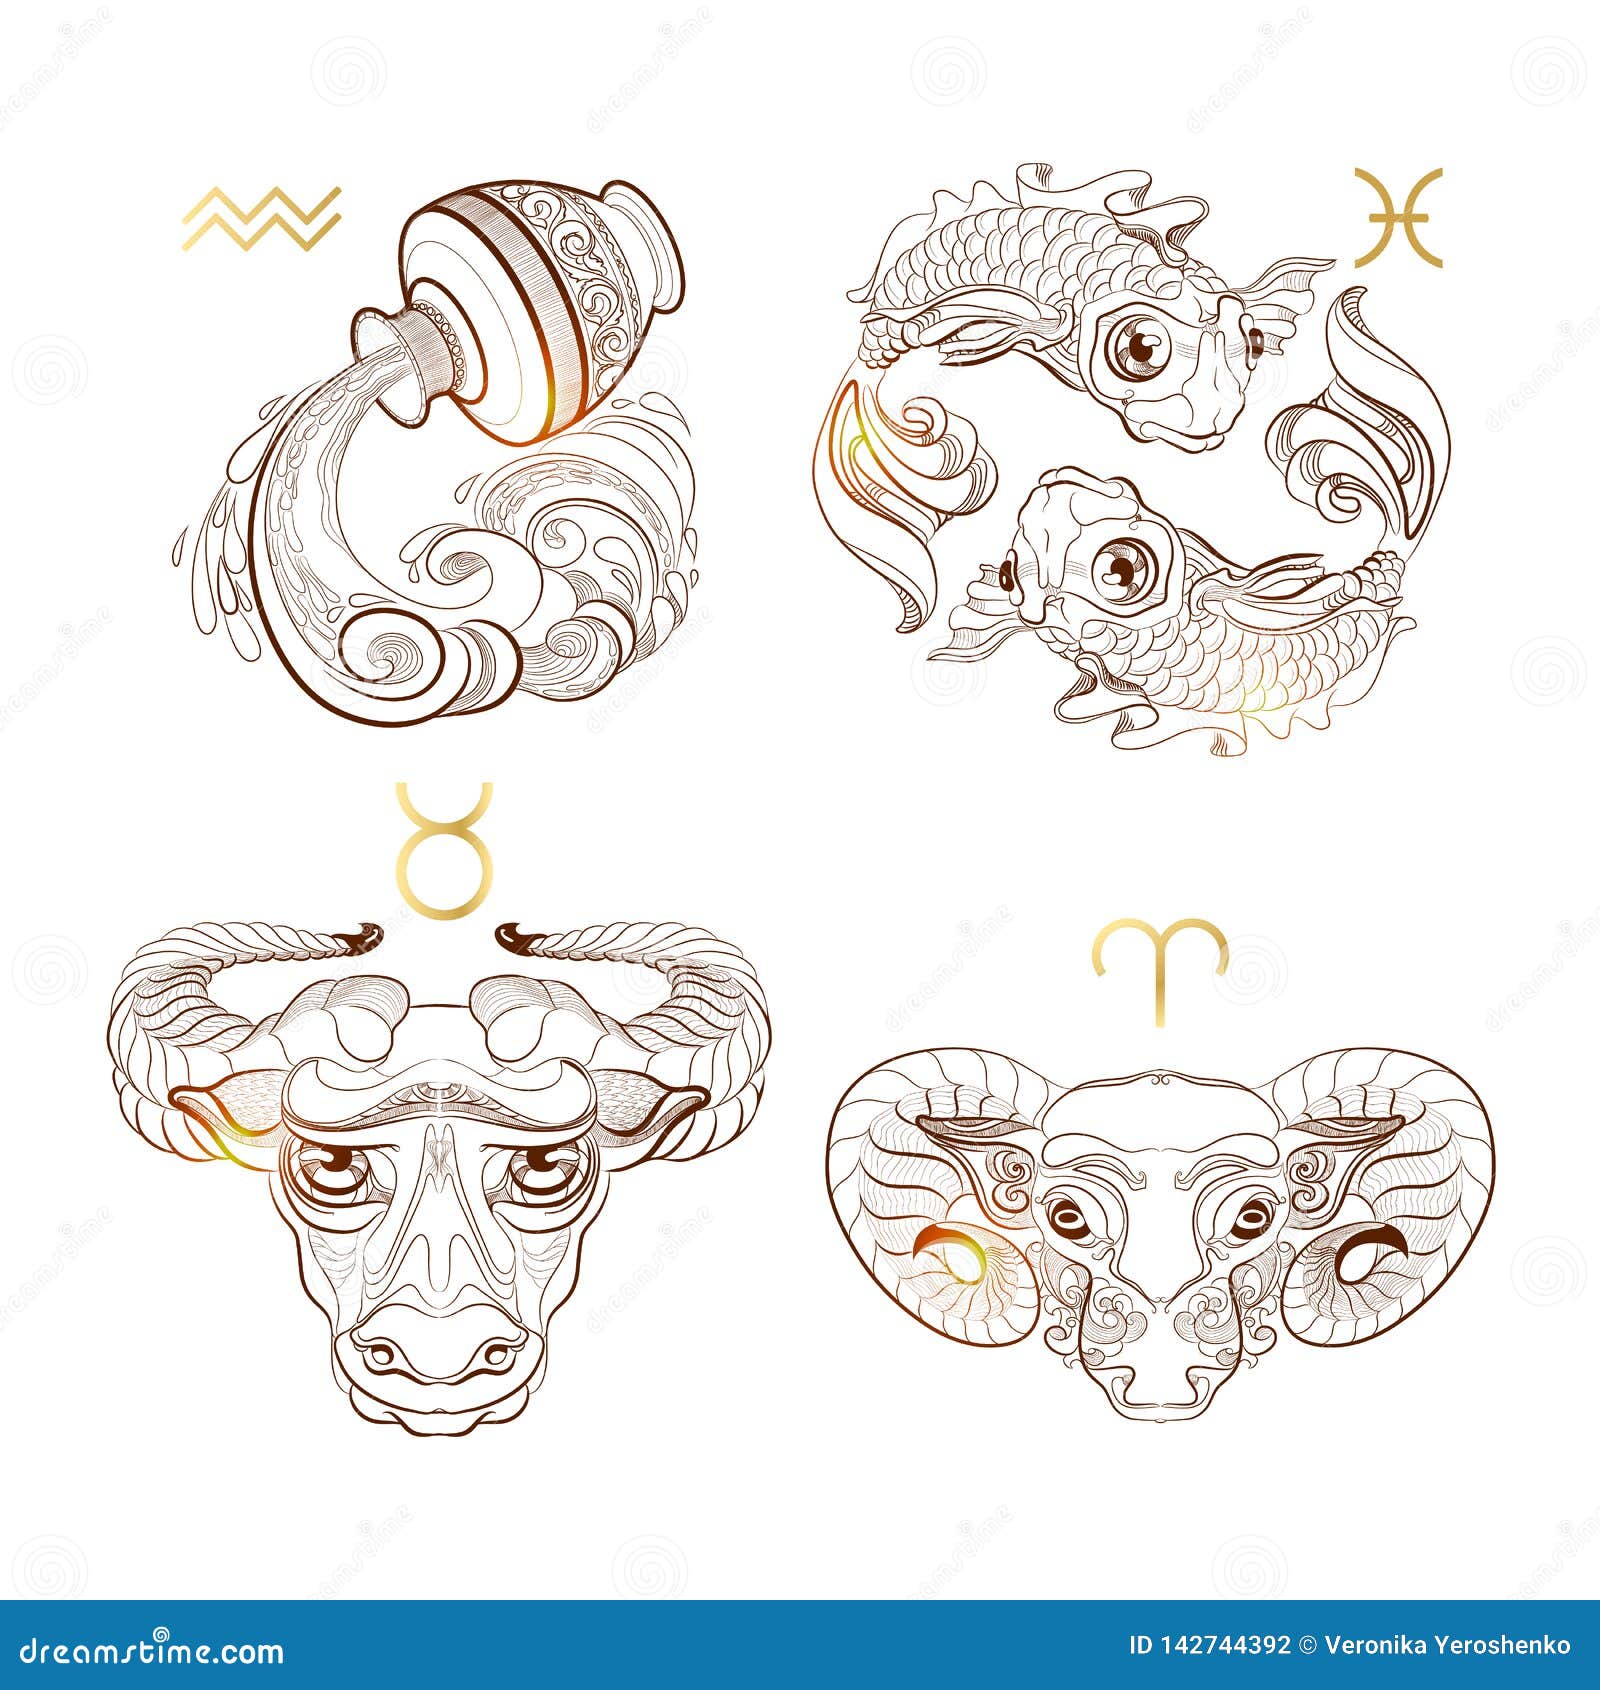 140 Aquarius Tattoo For Women Illustrations RoyaltyFree Vector Graphics   Clip Art  iStock